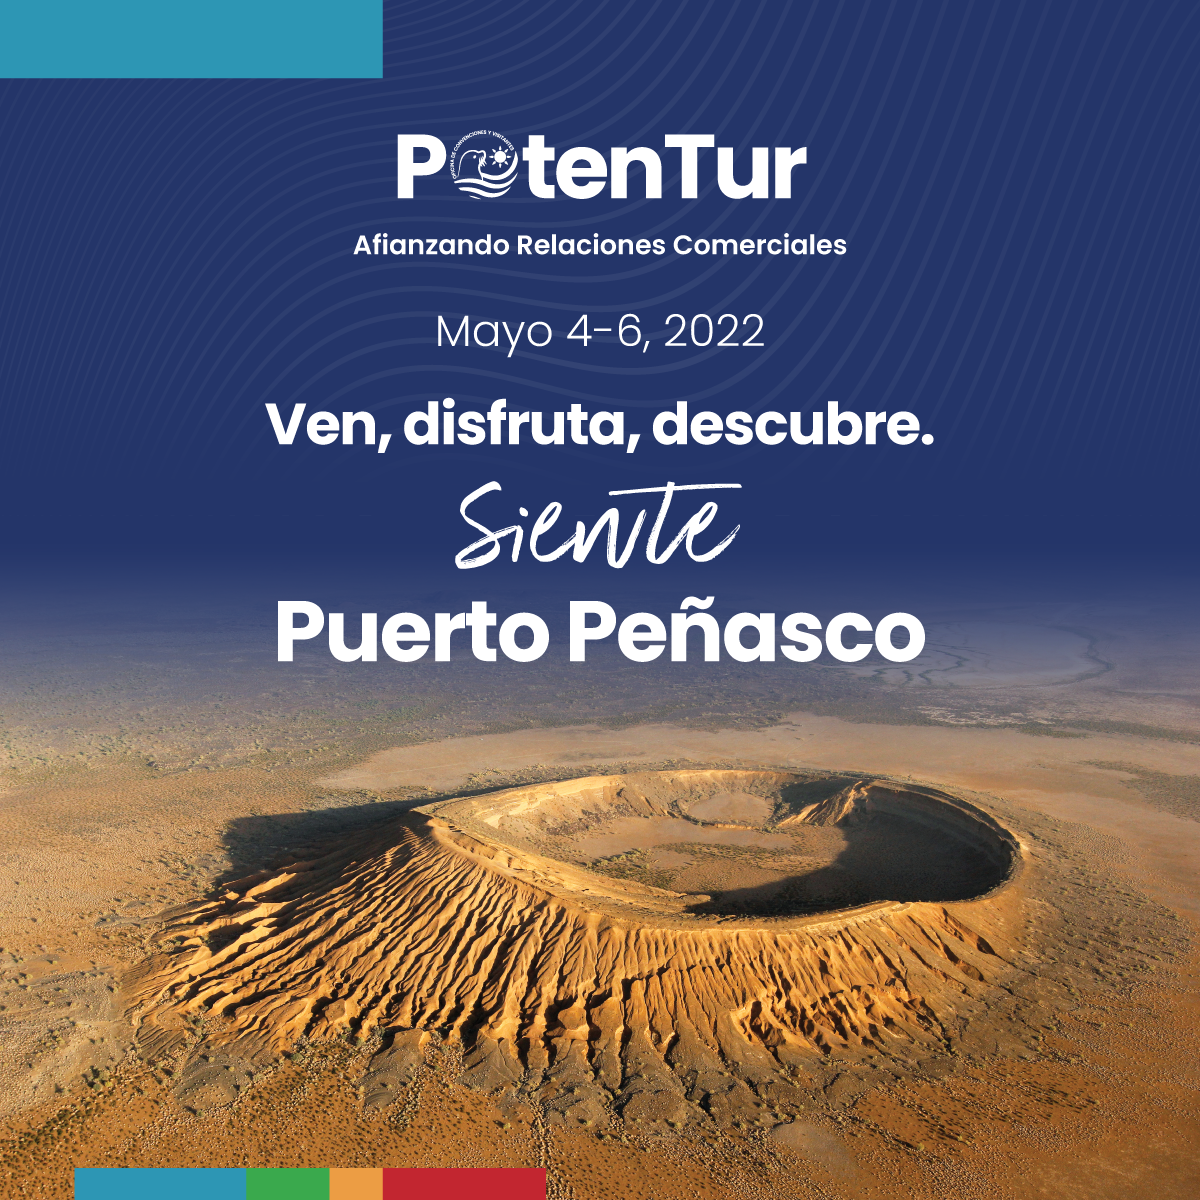 ocv-potentur Puerto Peñasco welcomed over 40 travel agents from across Mexico for POTENTUR 2022